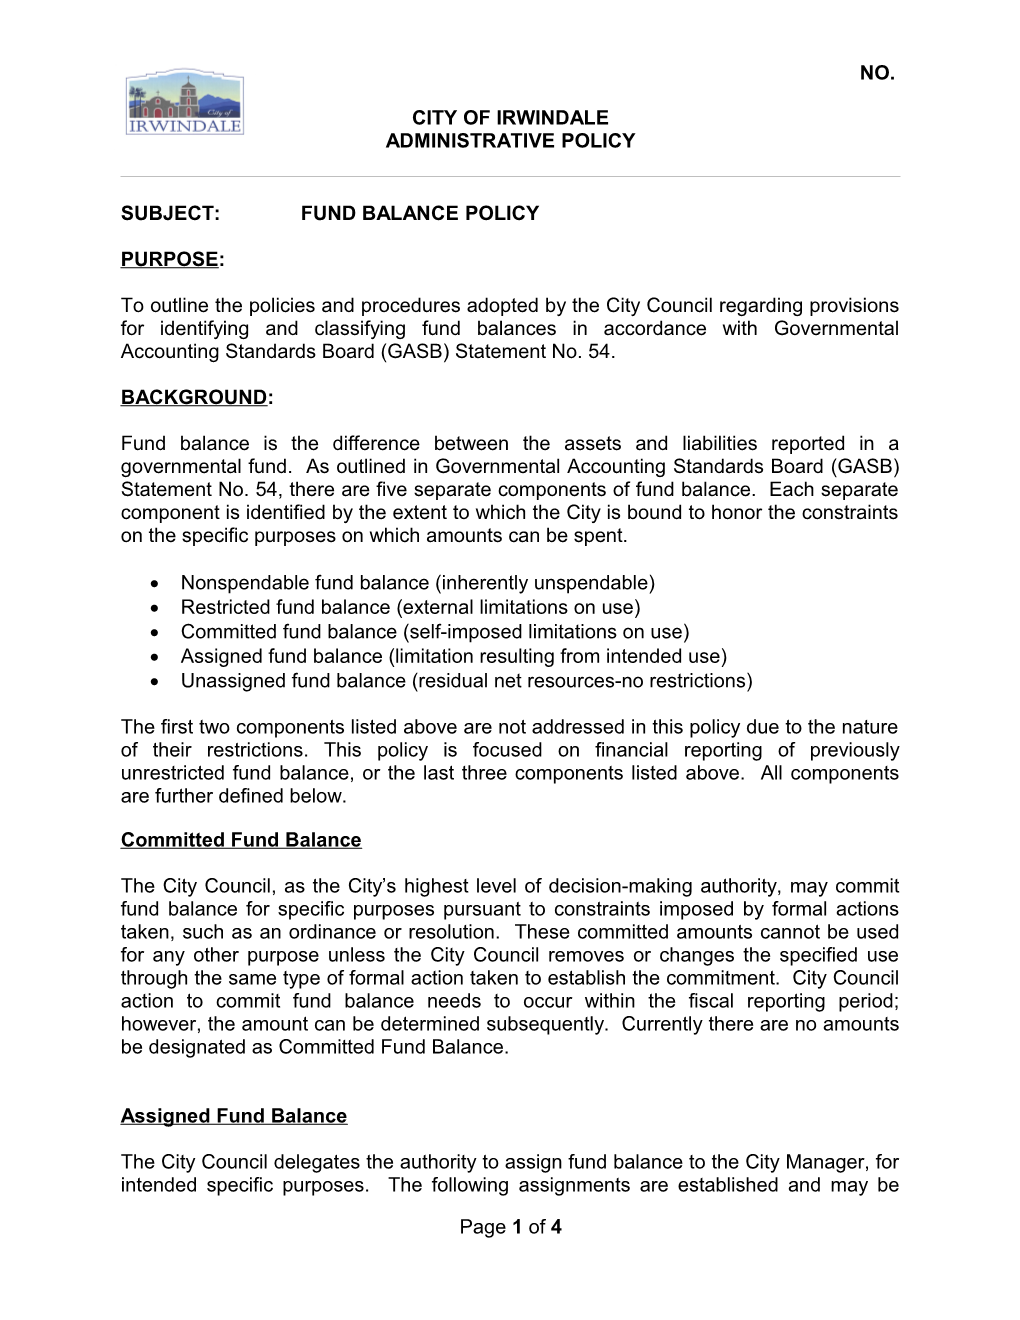 Subject:Fund Balance Policy